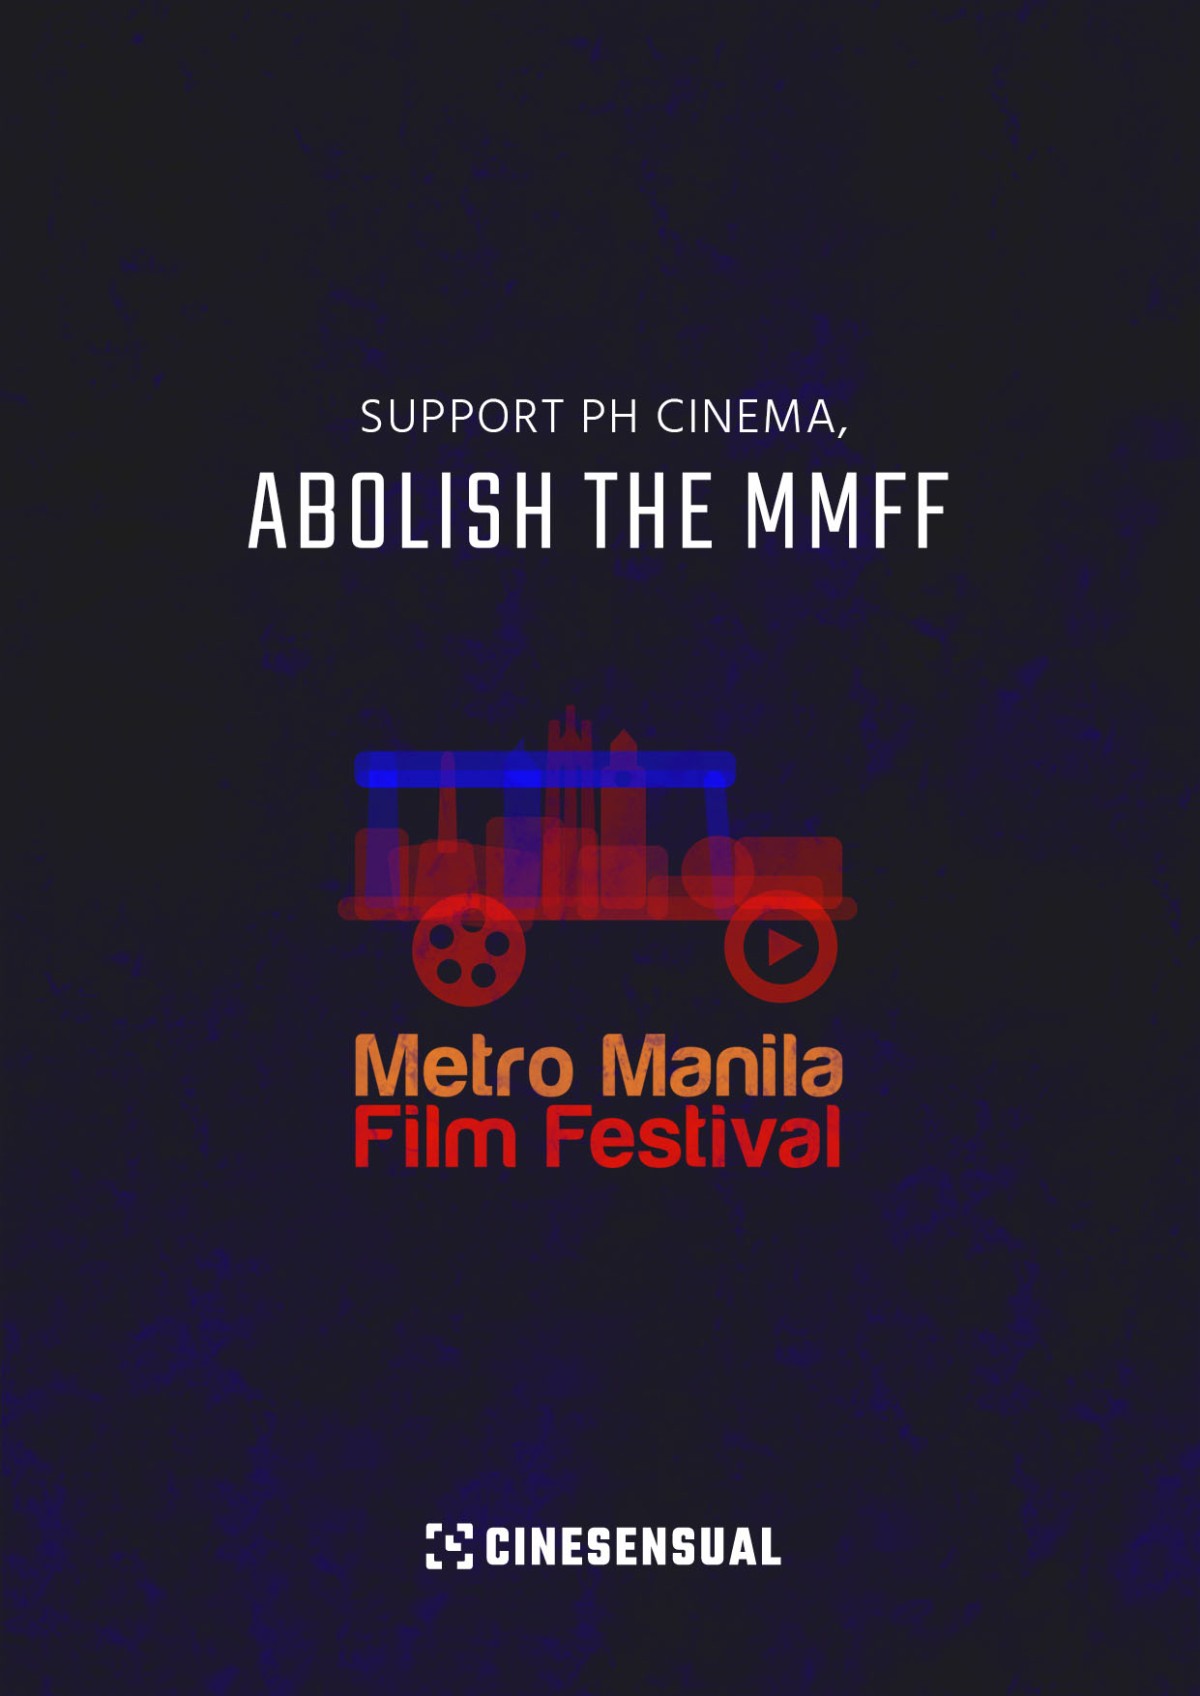 Support PH Cinema, abolish the MMFF.￼